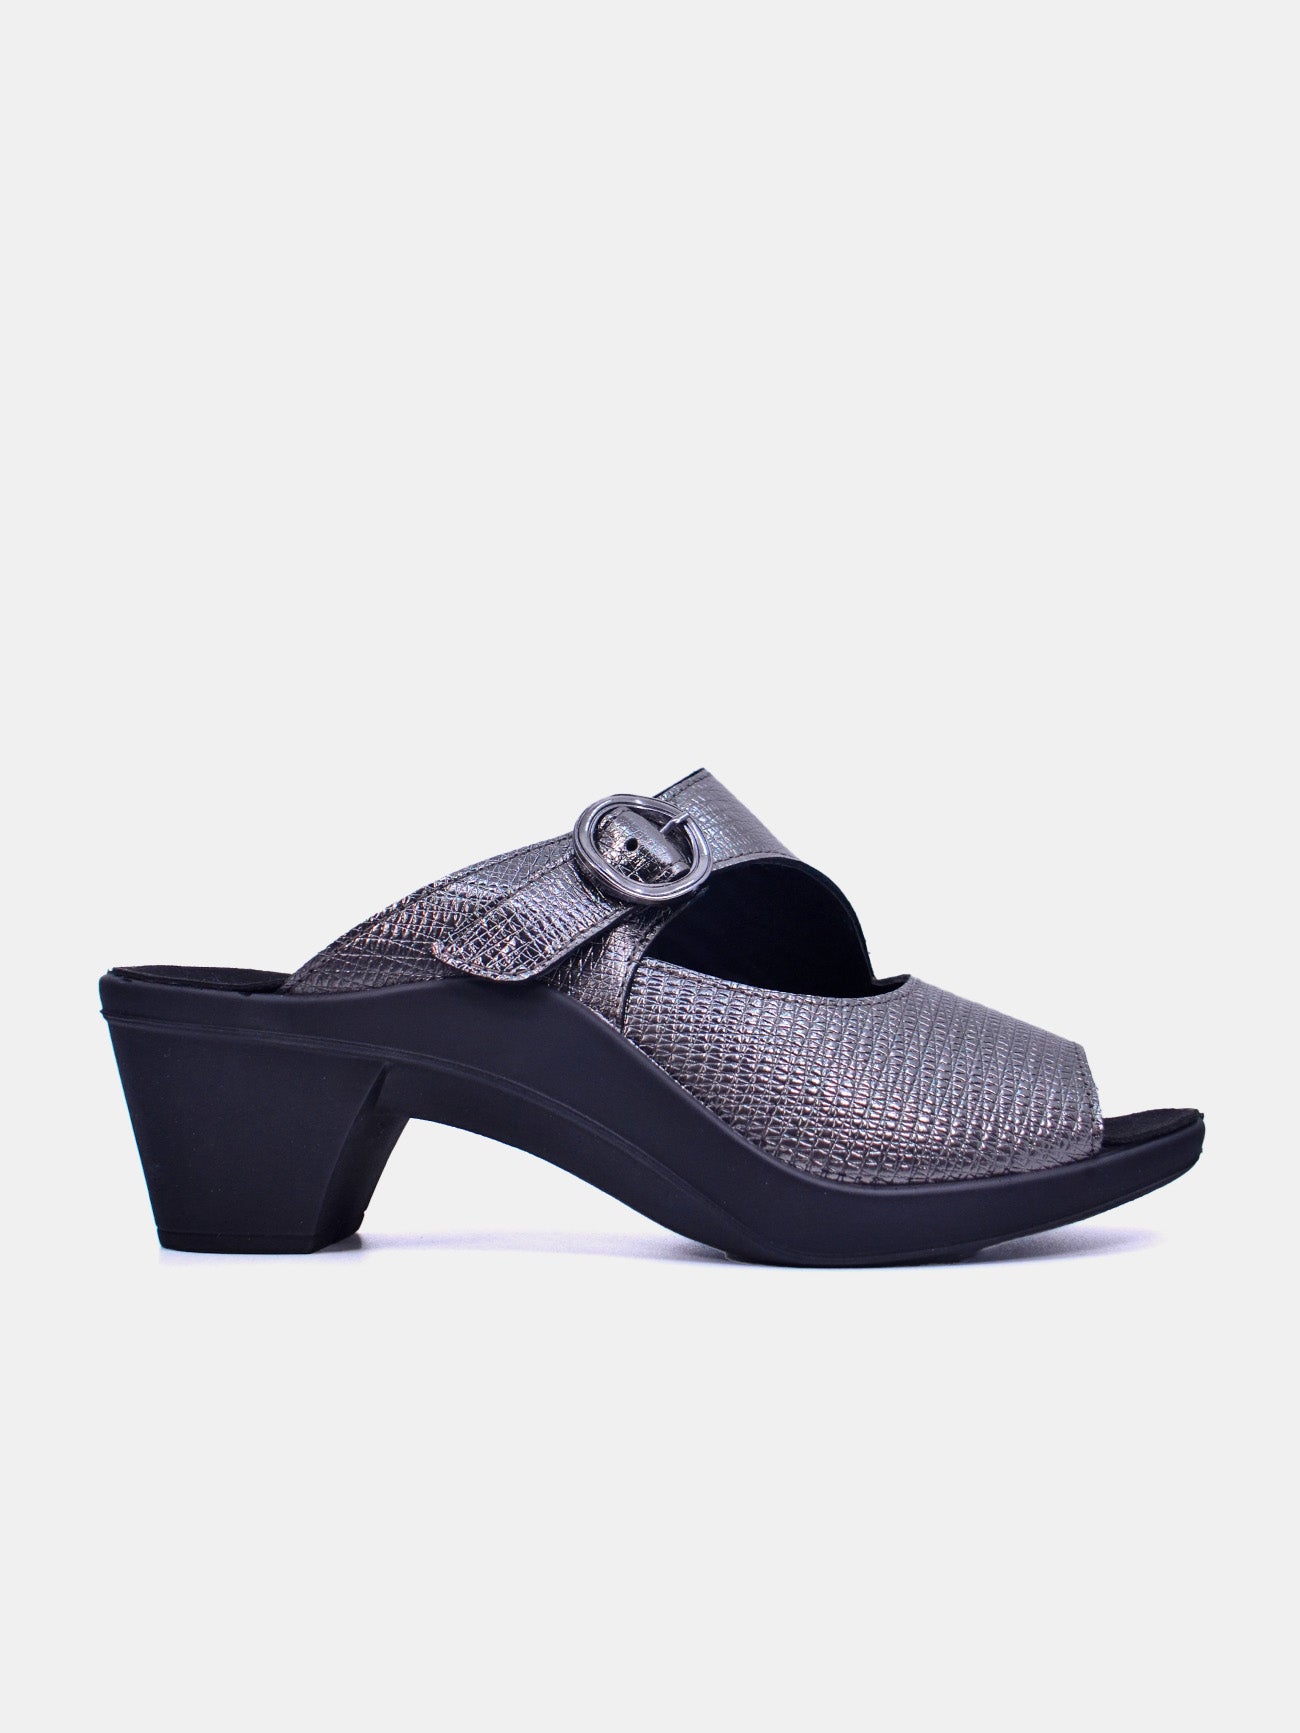 Romika 27161 Womens Heeled Sandals